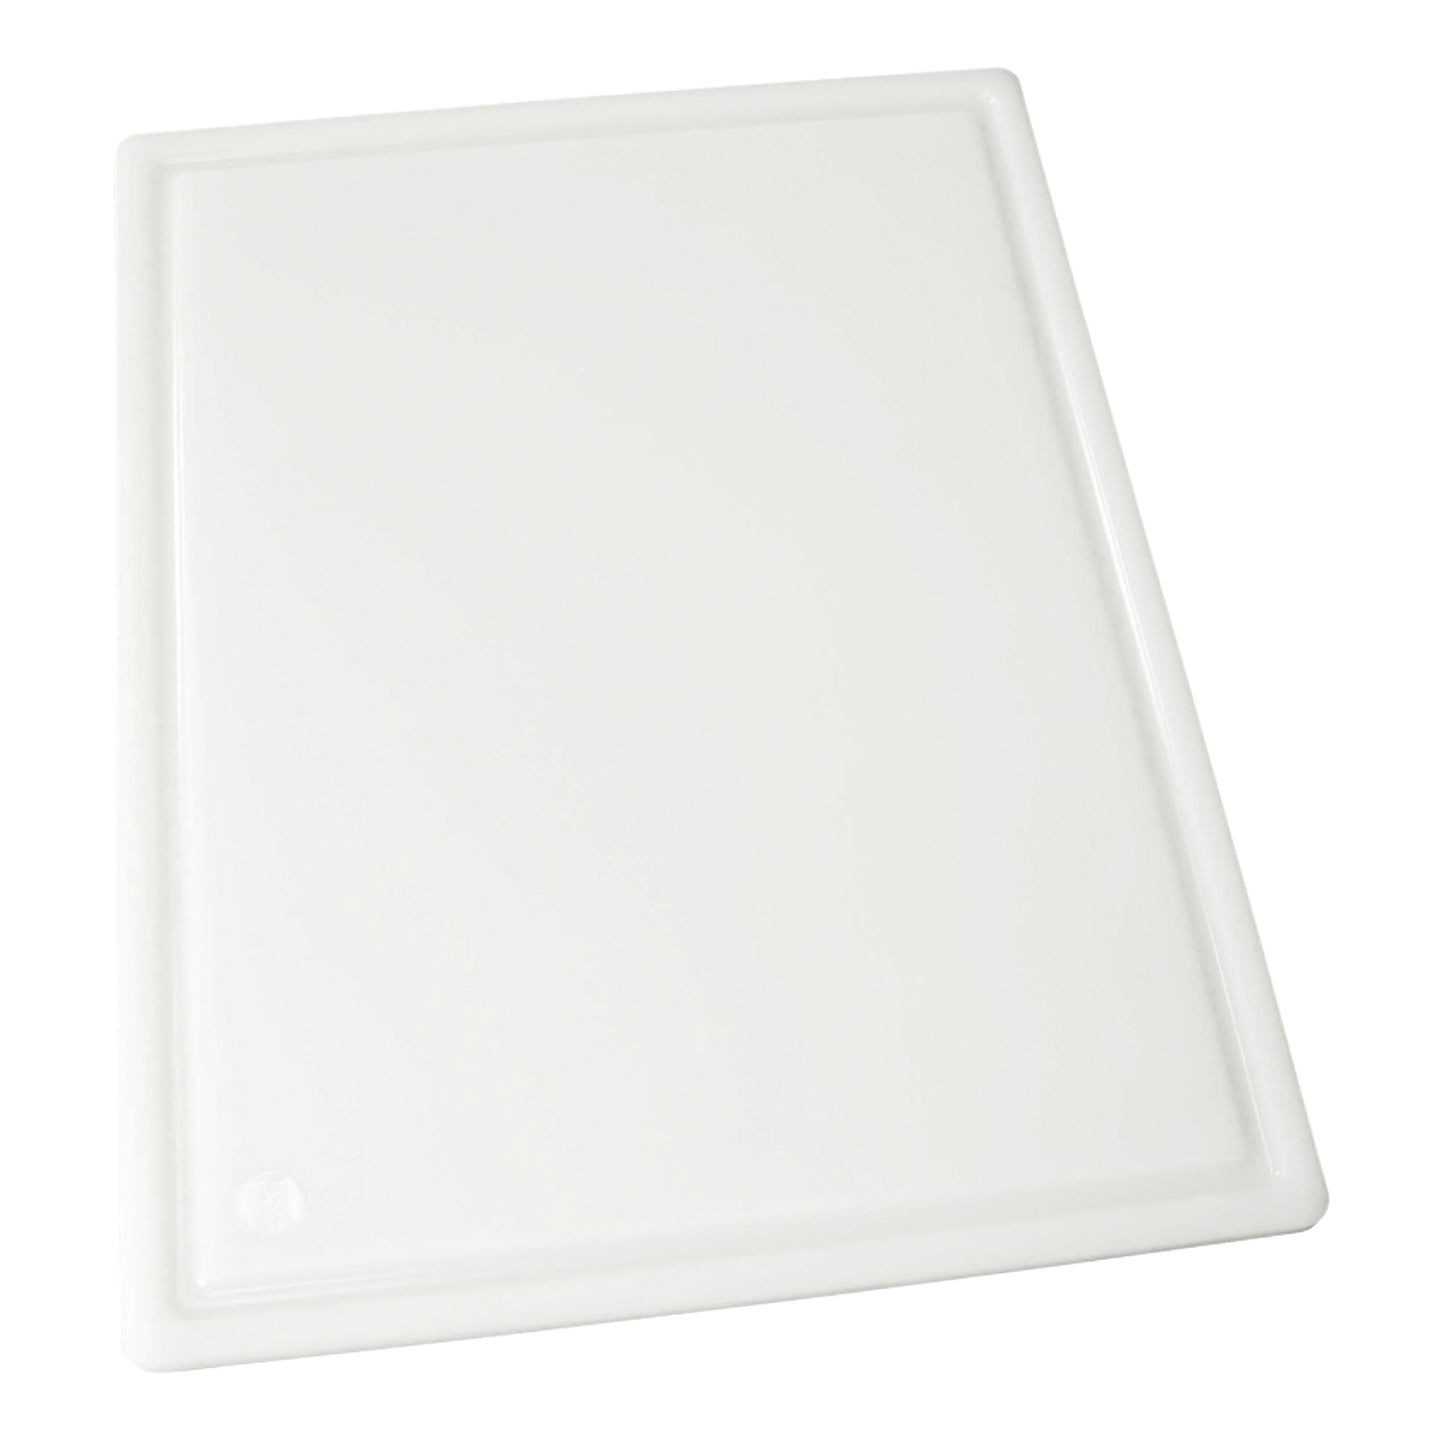 CBI-1520 - White Cutting Board with Channel - 15 x 20 x 1/2